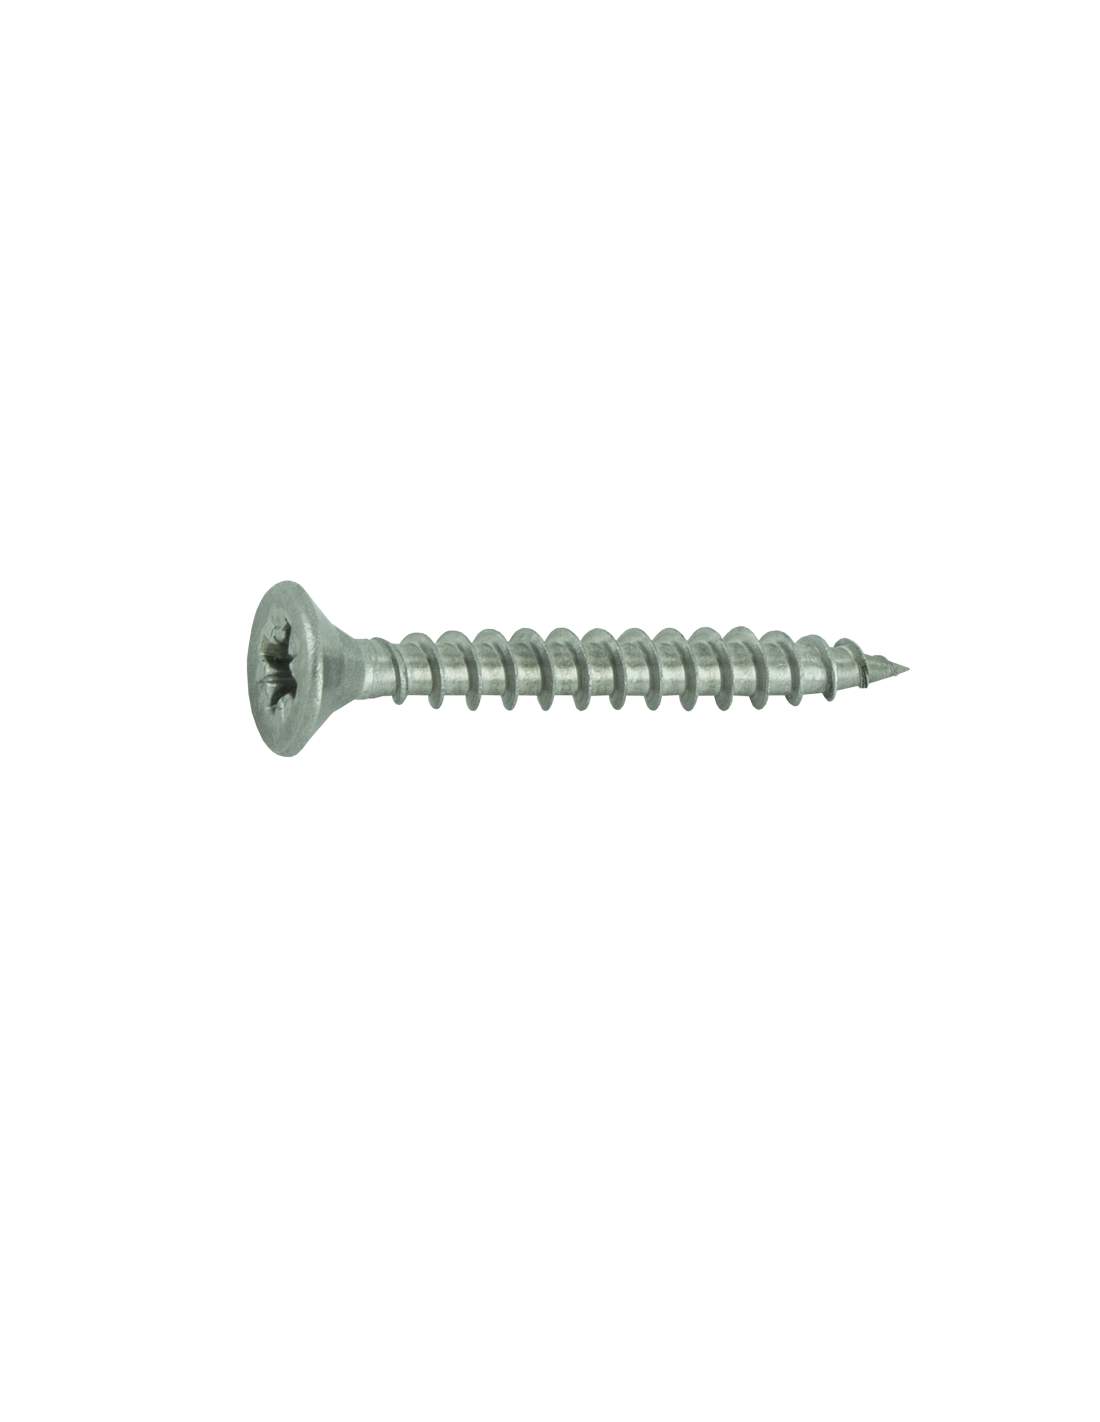 Pozidriv stainless steel A2 4x30 countersunk screws, 24 pcs.